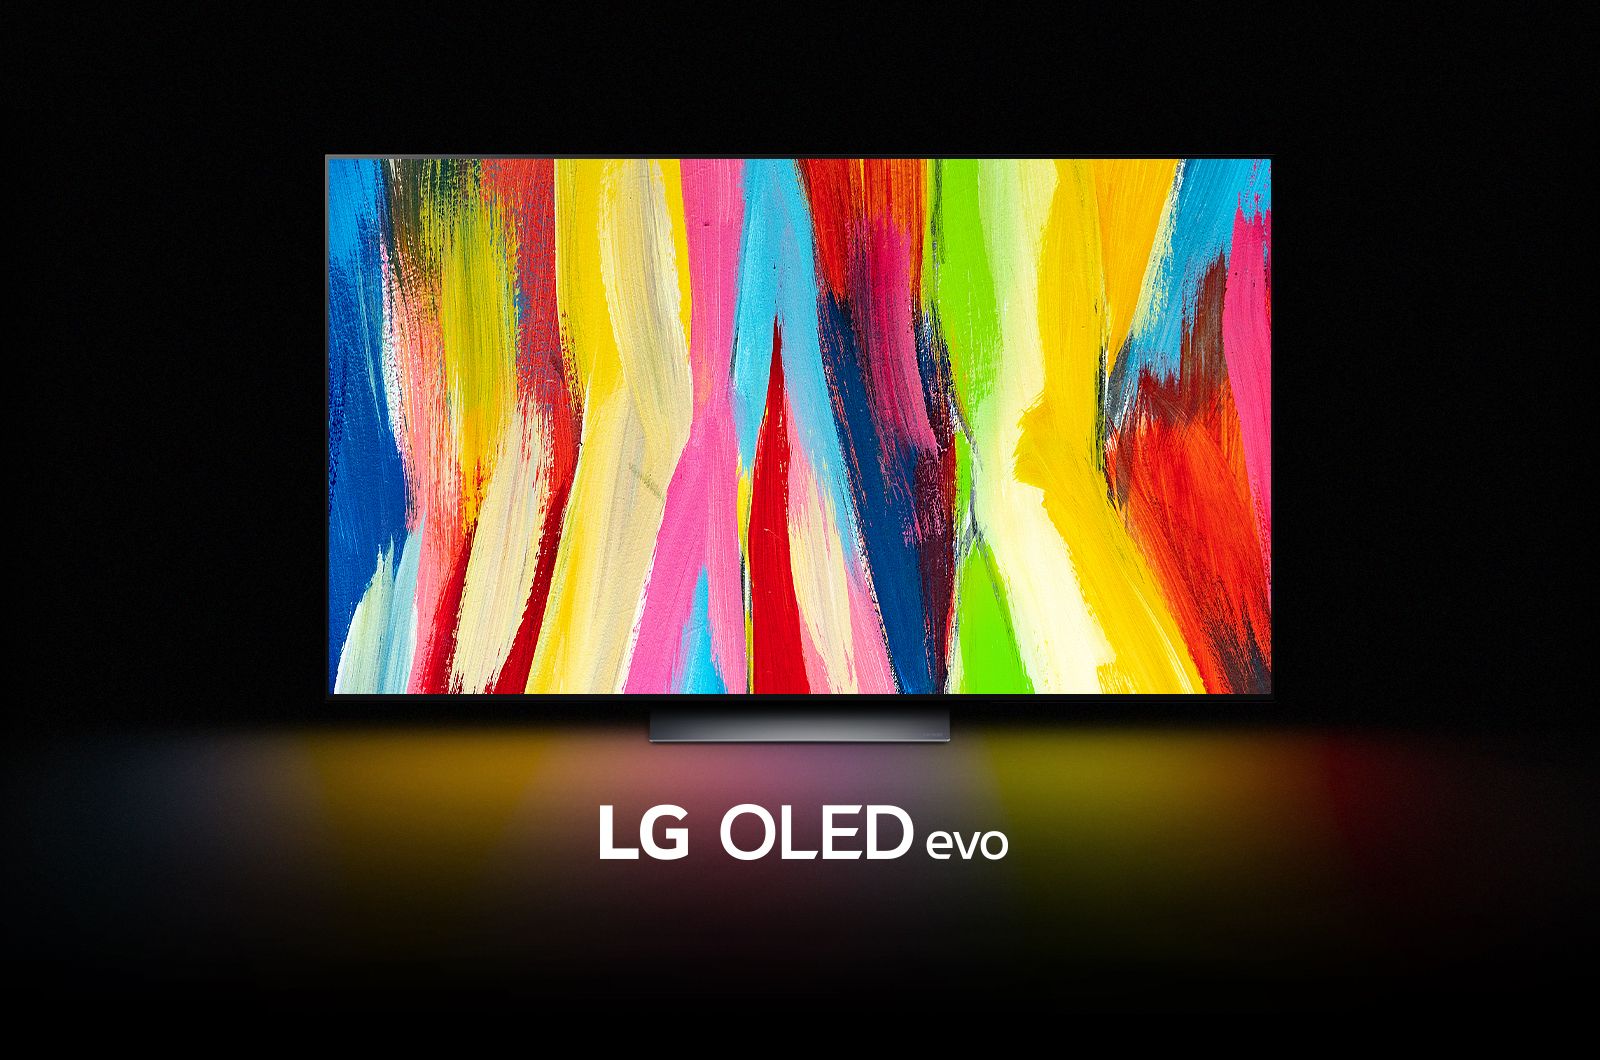 Logotip LG OLED evo Gallery Edition